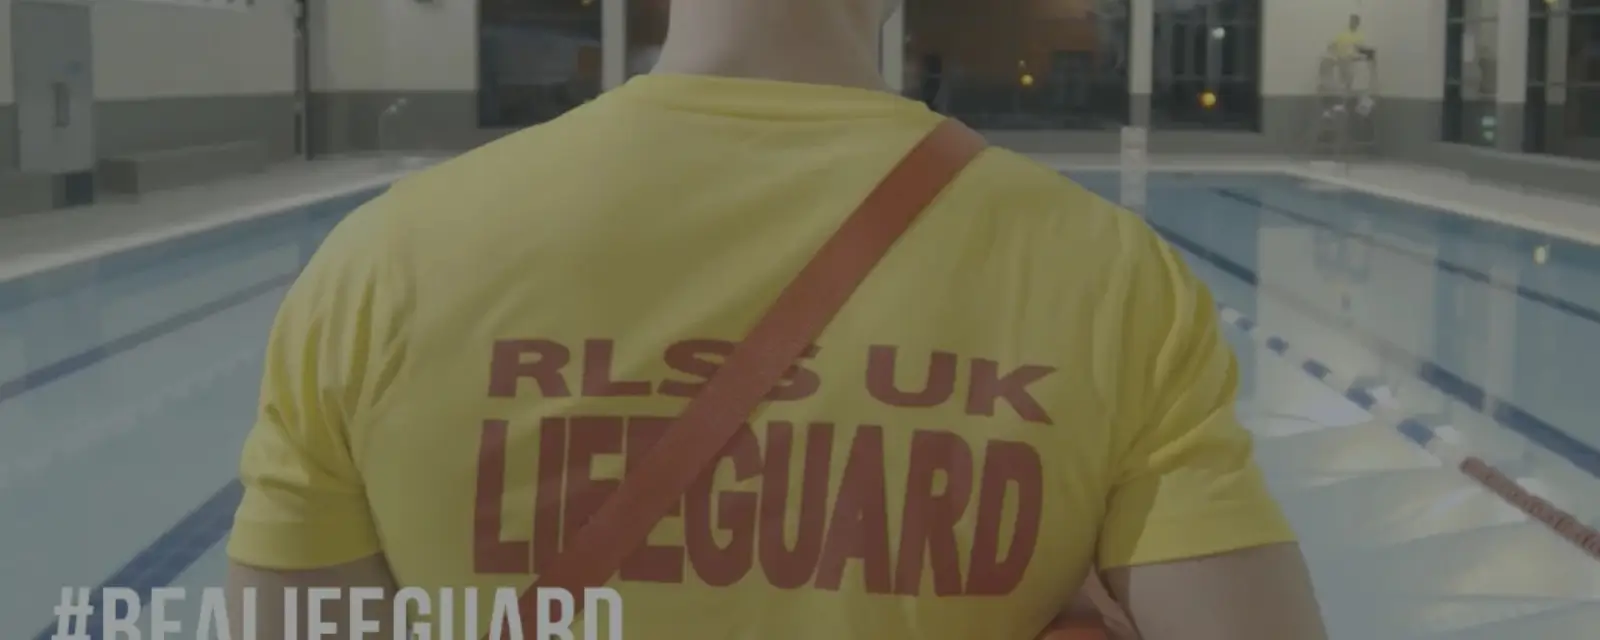 Lifeguard with RLSS UK on back of t-shirt